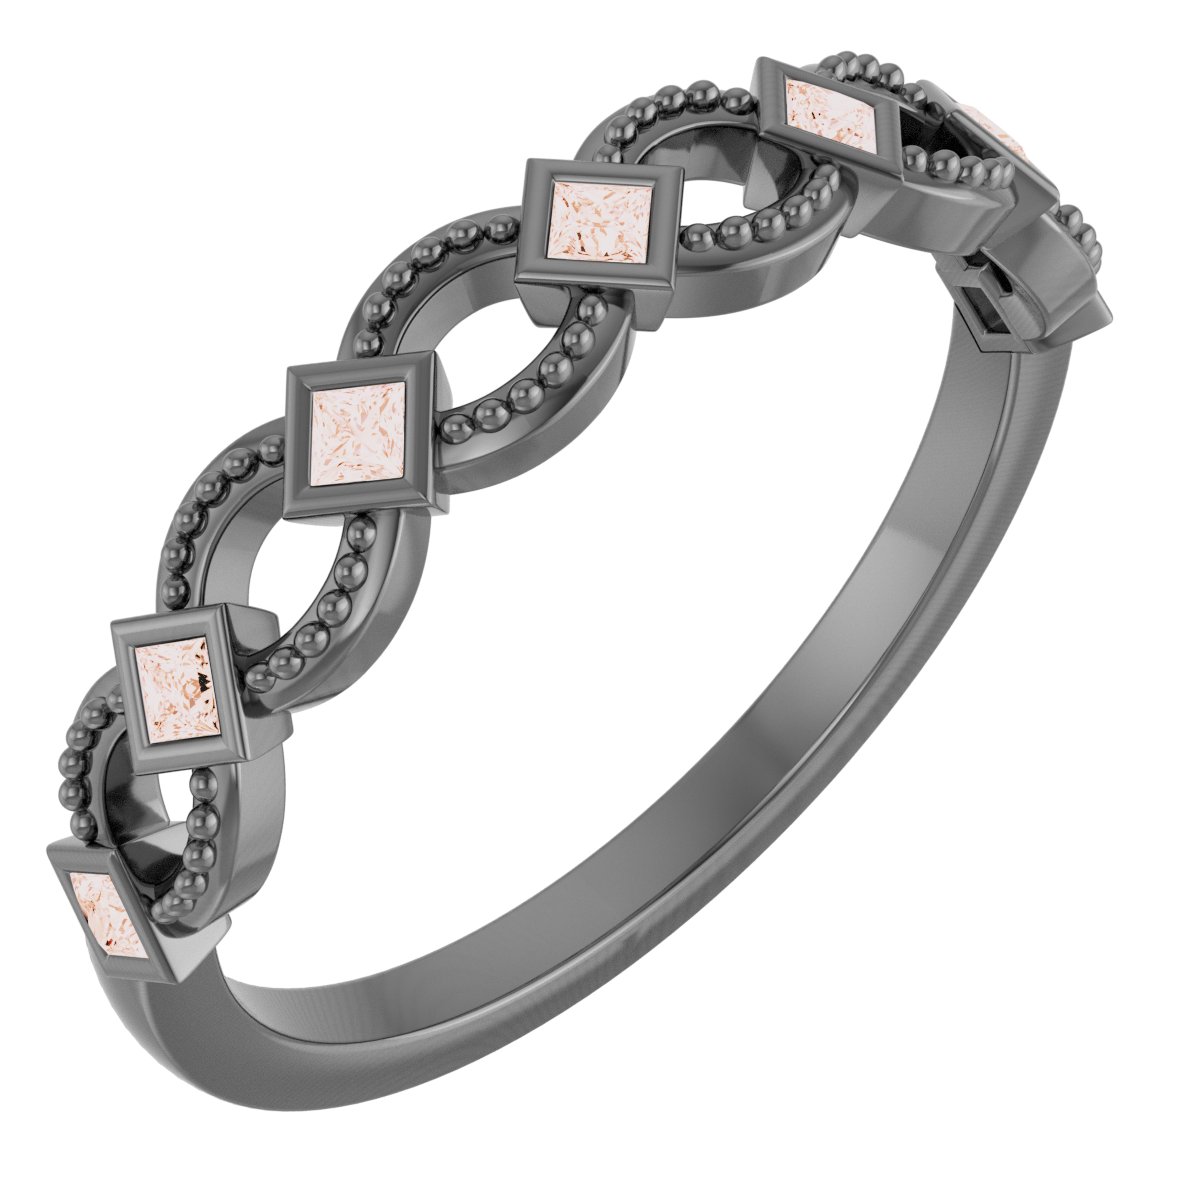 14K Rose 1/6 CTW Natural Diamond Stackable Ring